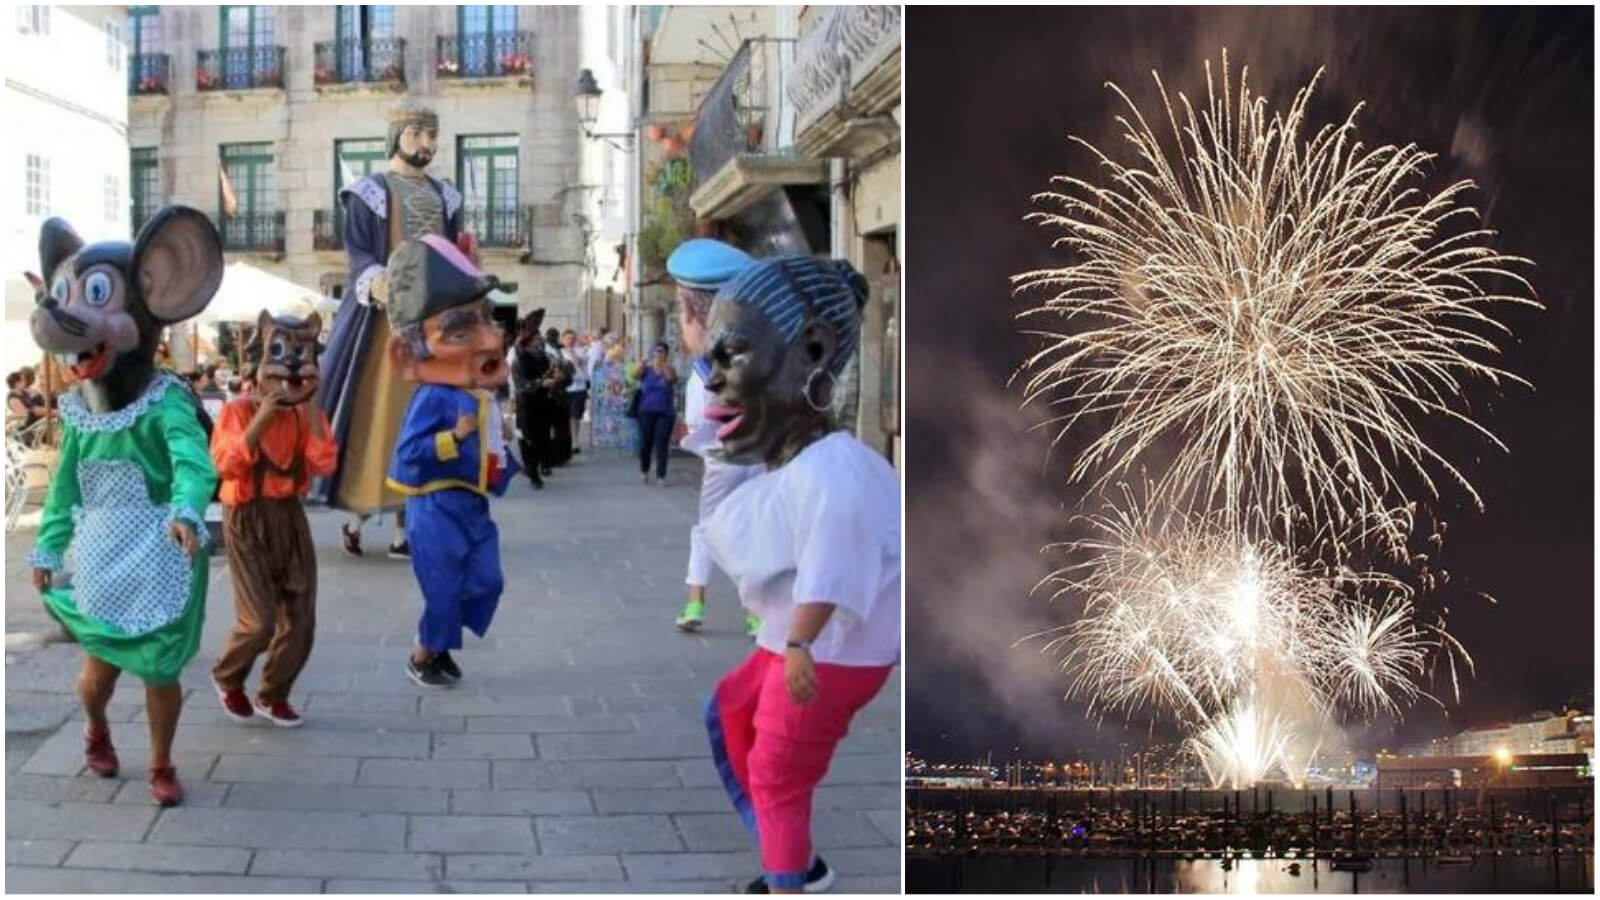 7 Most Popular Festivals in Baiona, Galicia, Spain - 4. Fiestas de Virgen de la Anunciada de Baiona (Festivities of the Virgin Announced of Baiona)